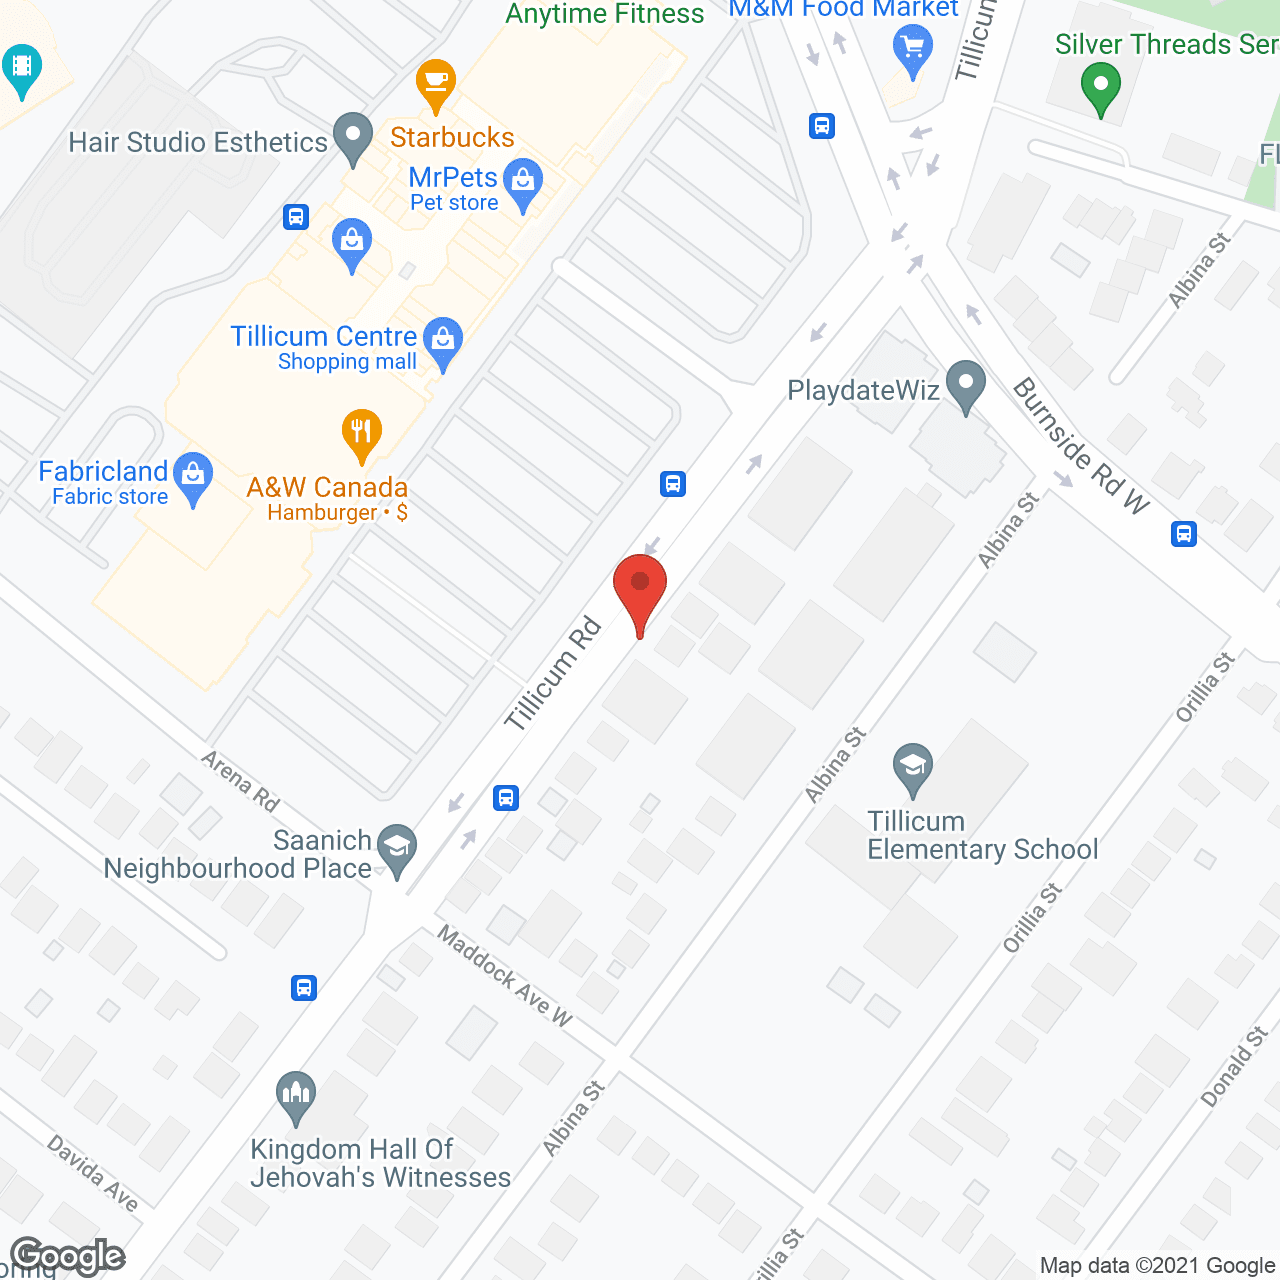 Montague House Ltd in google map